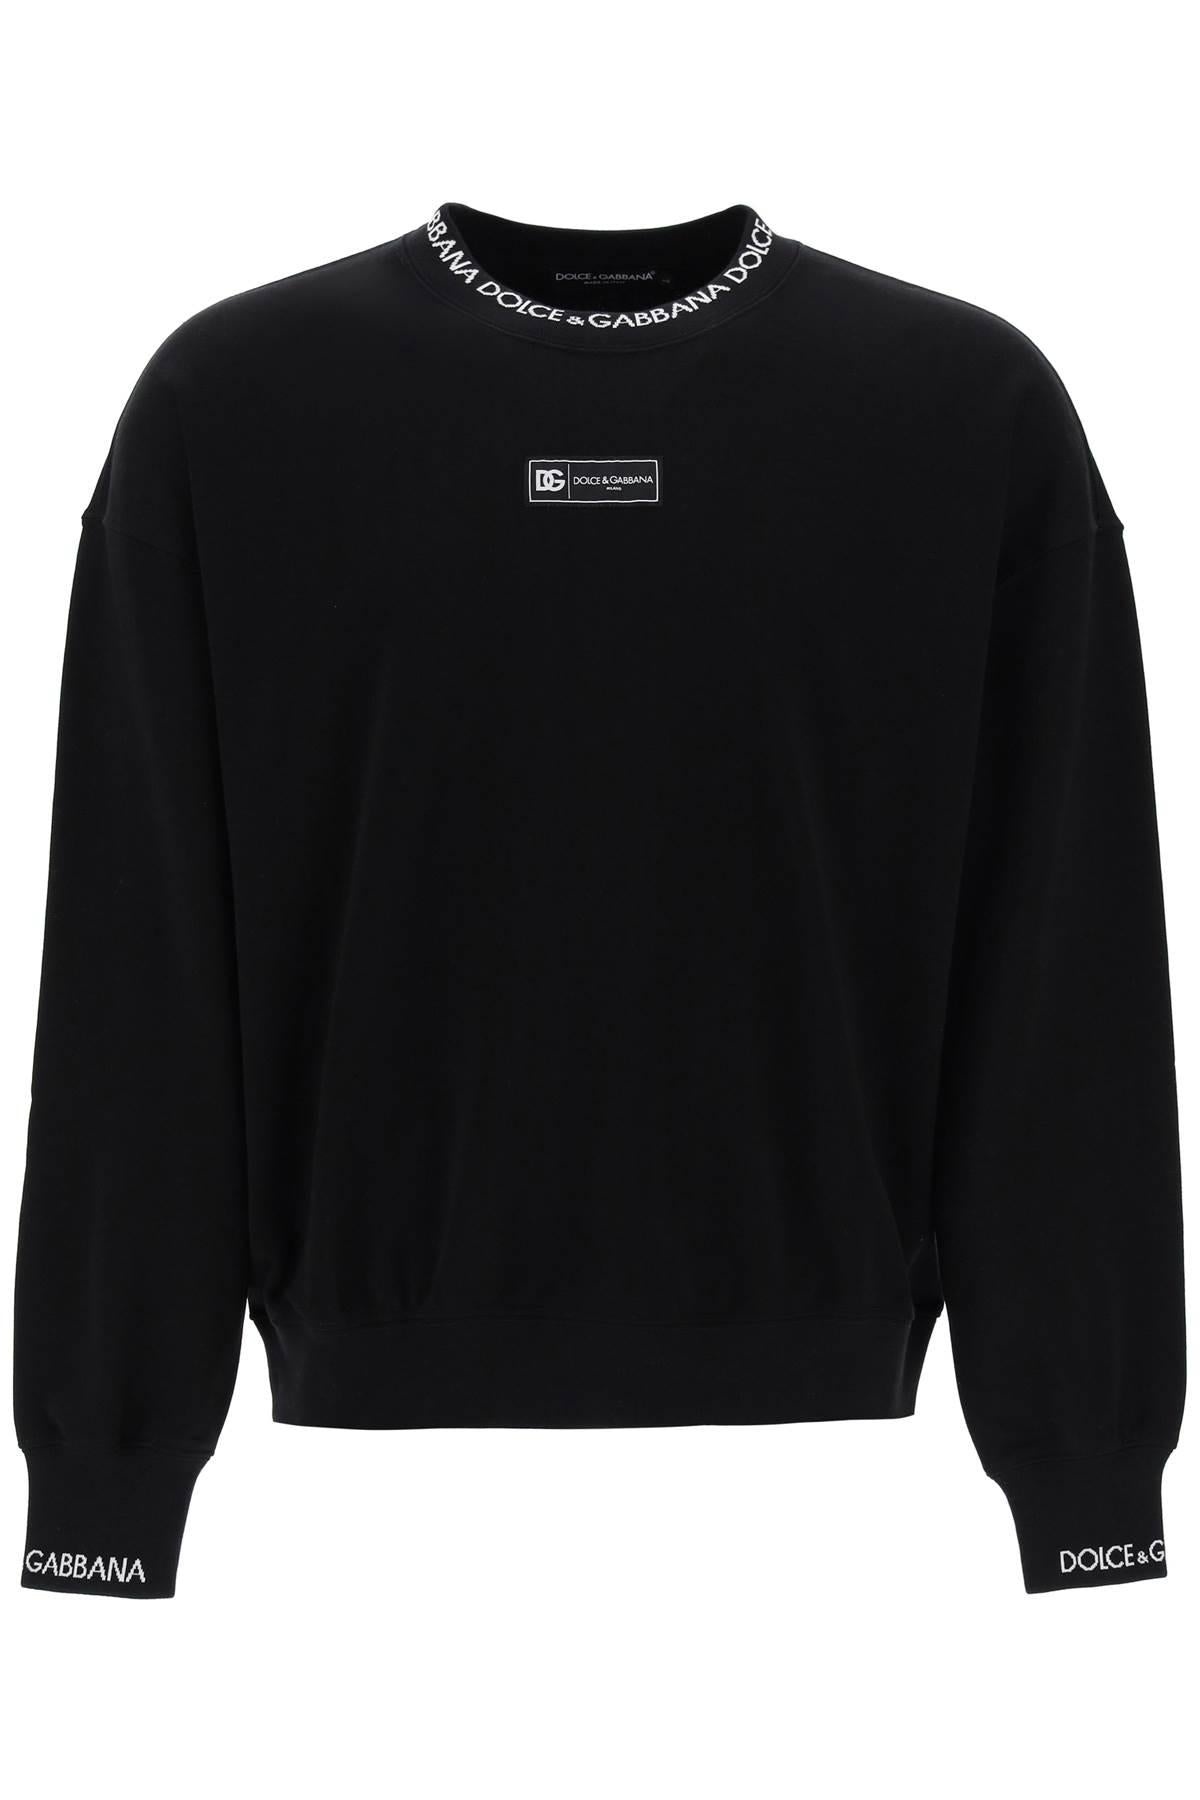 Dolce & Gabbana "Oversized Sweatshirt With - 1